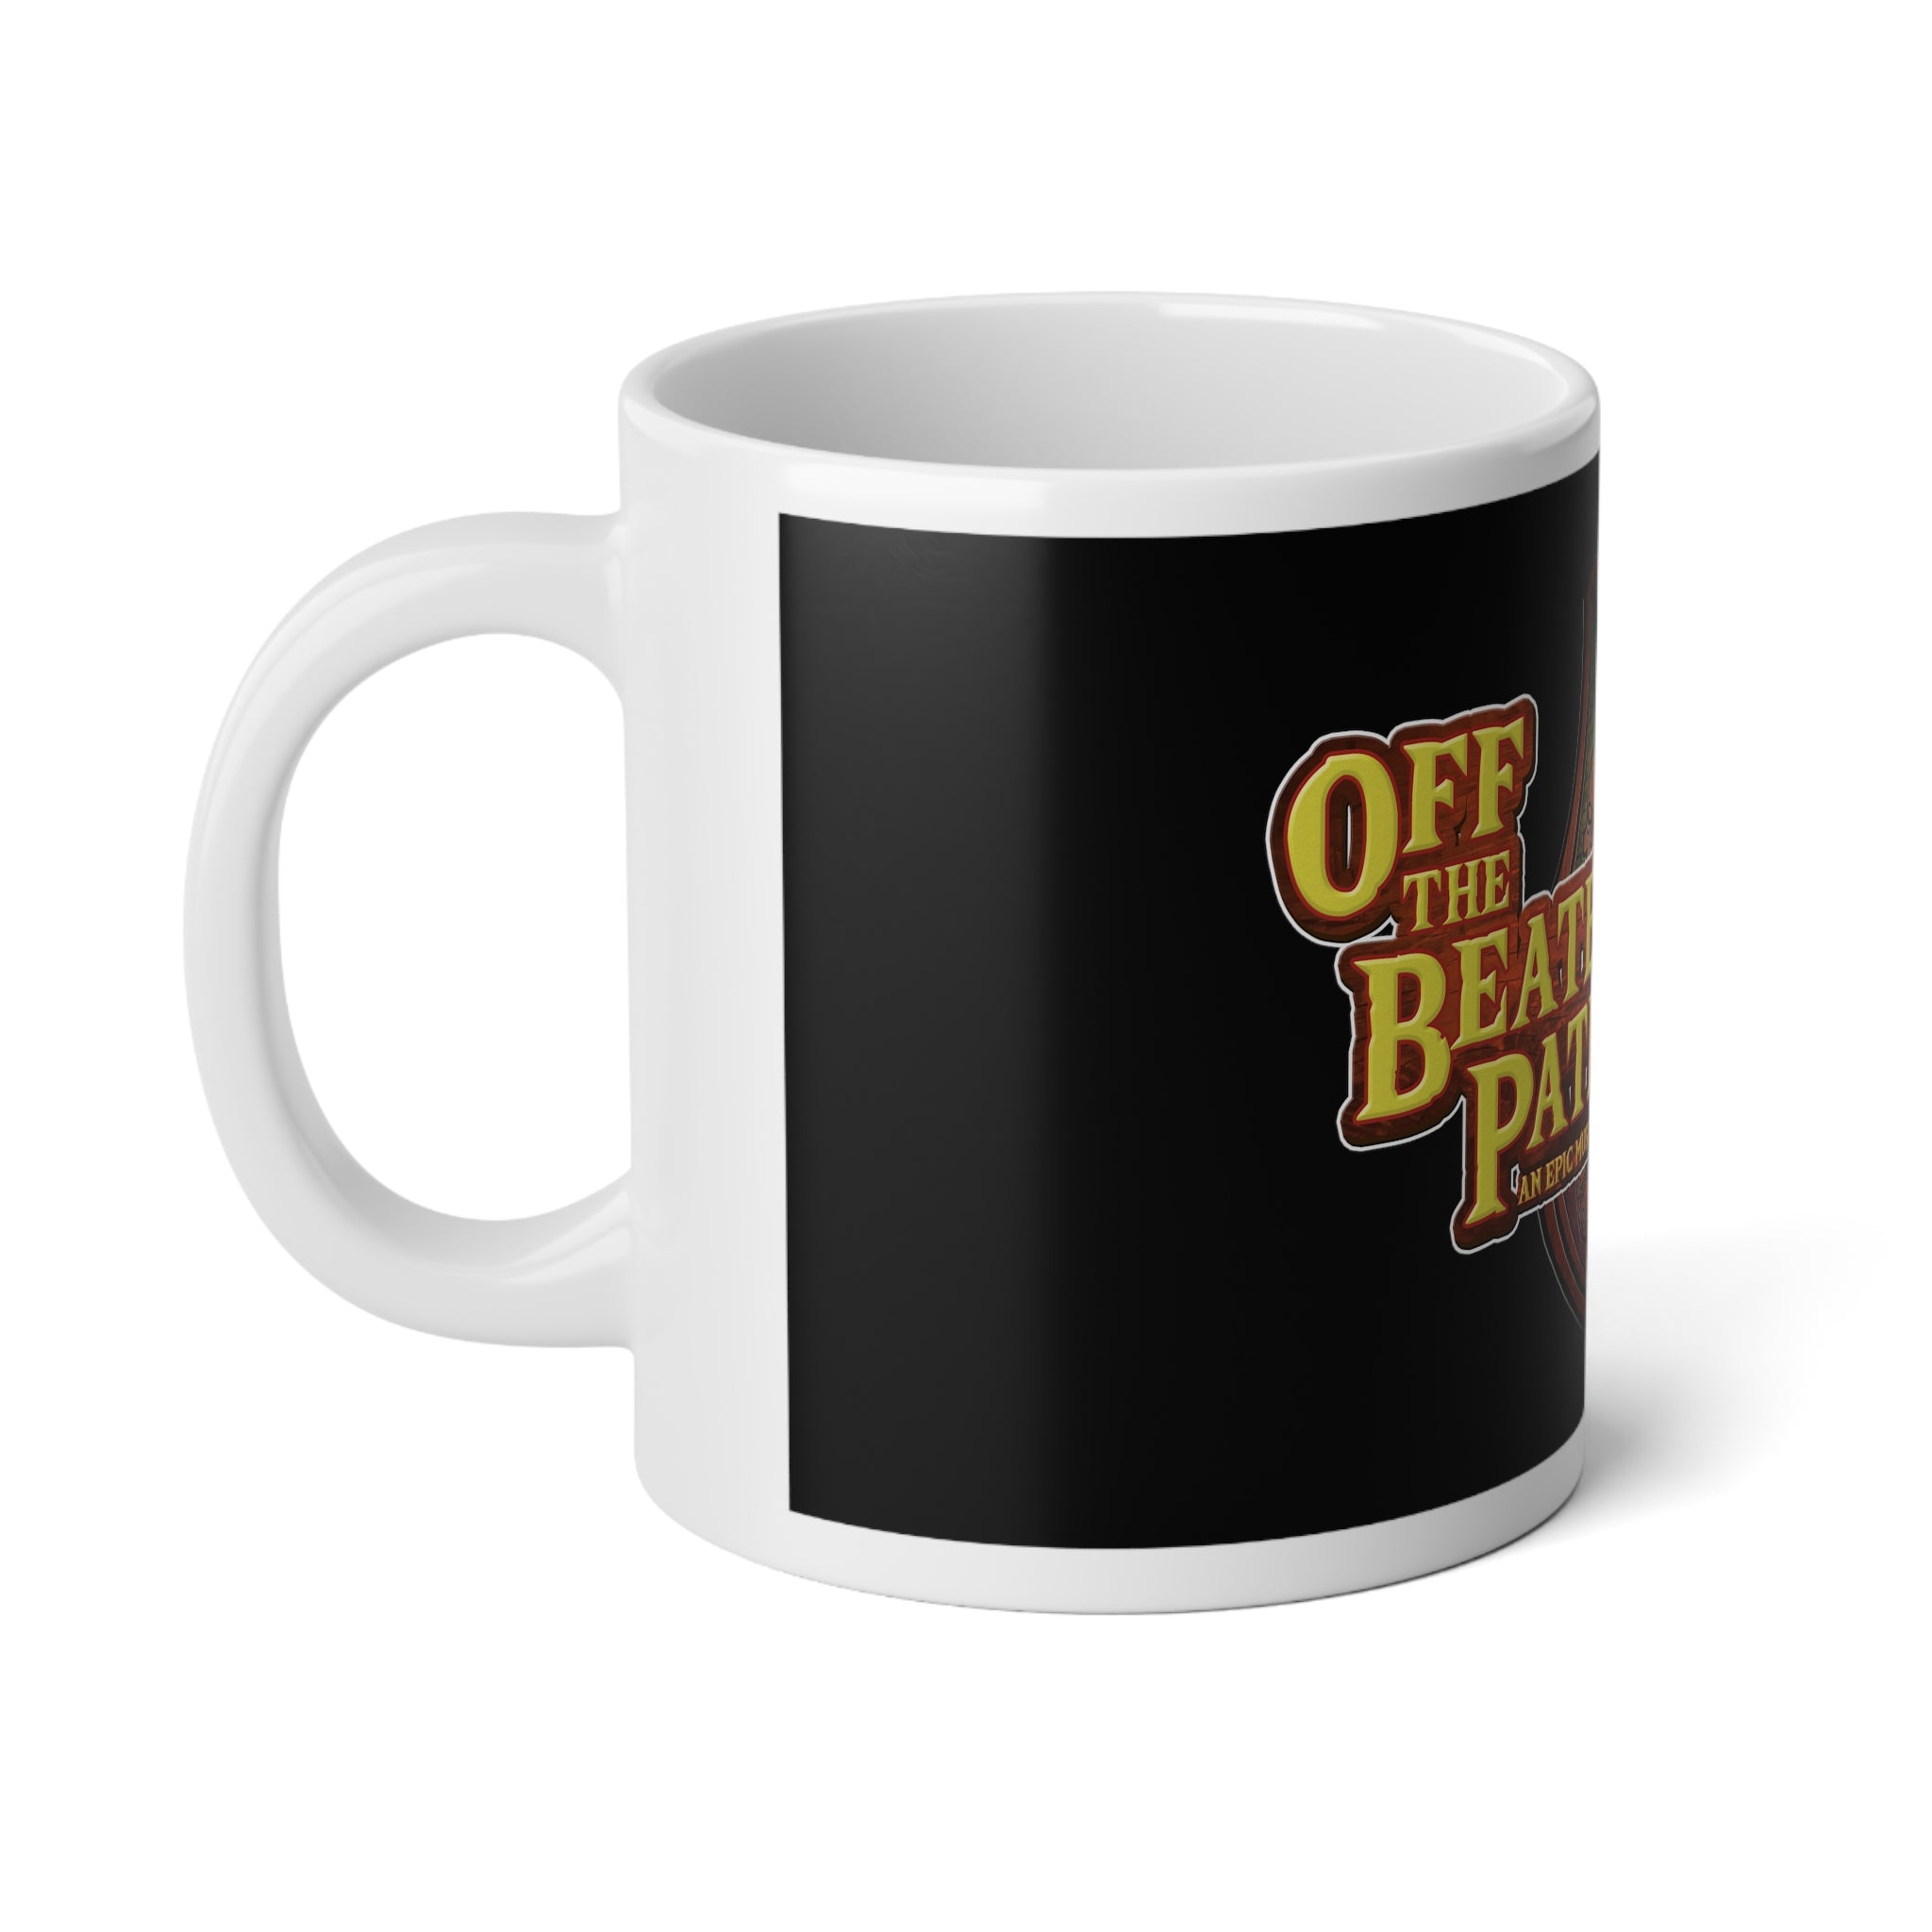 OBP Crest Jumbo Mug, 20oz - Black